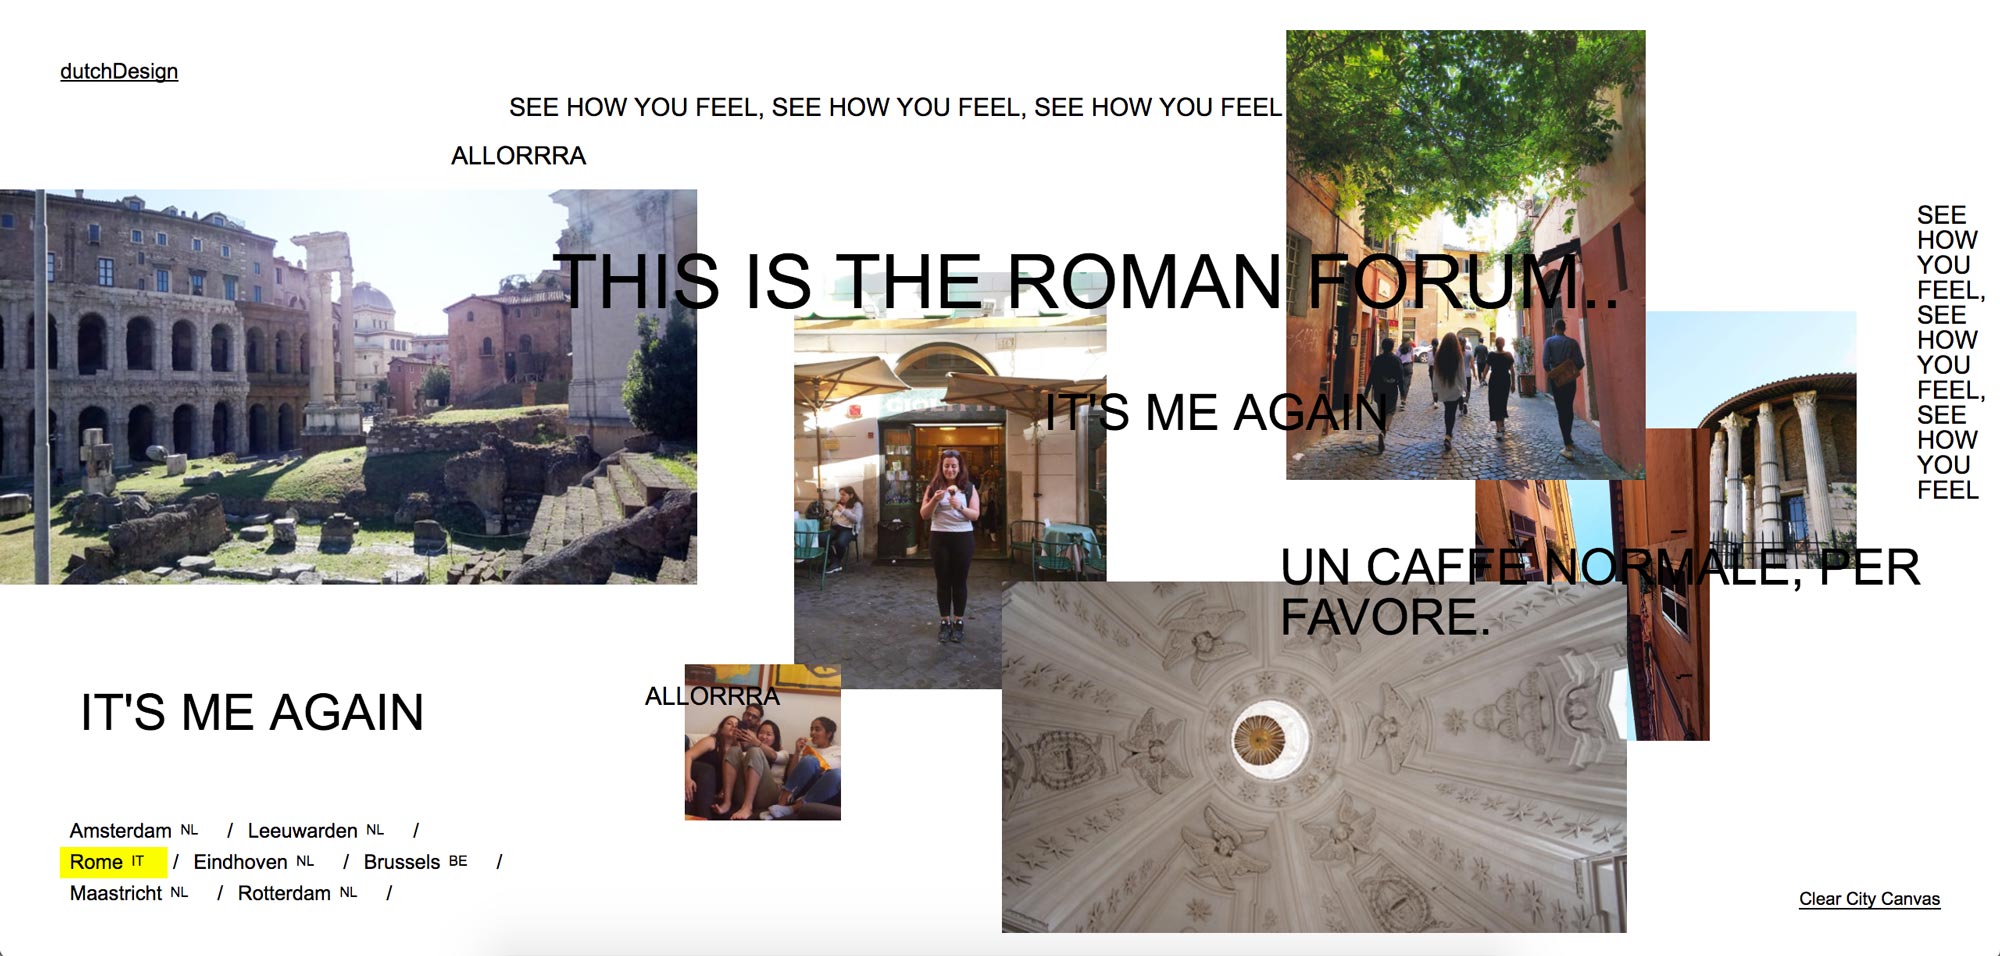 anecdotes page - rome screenshot